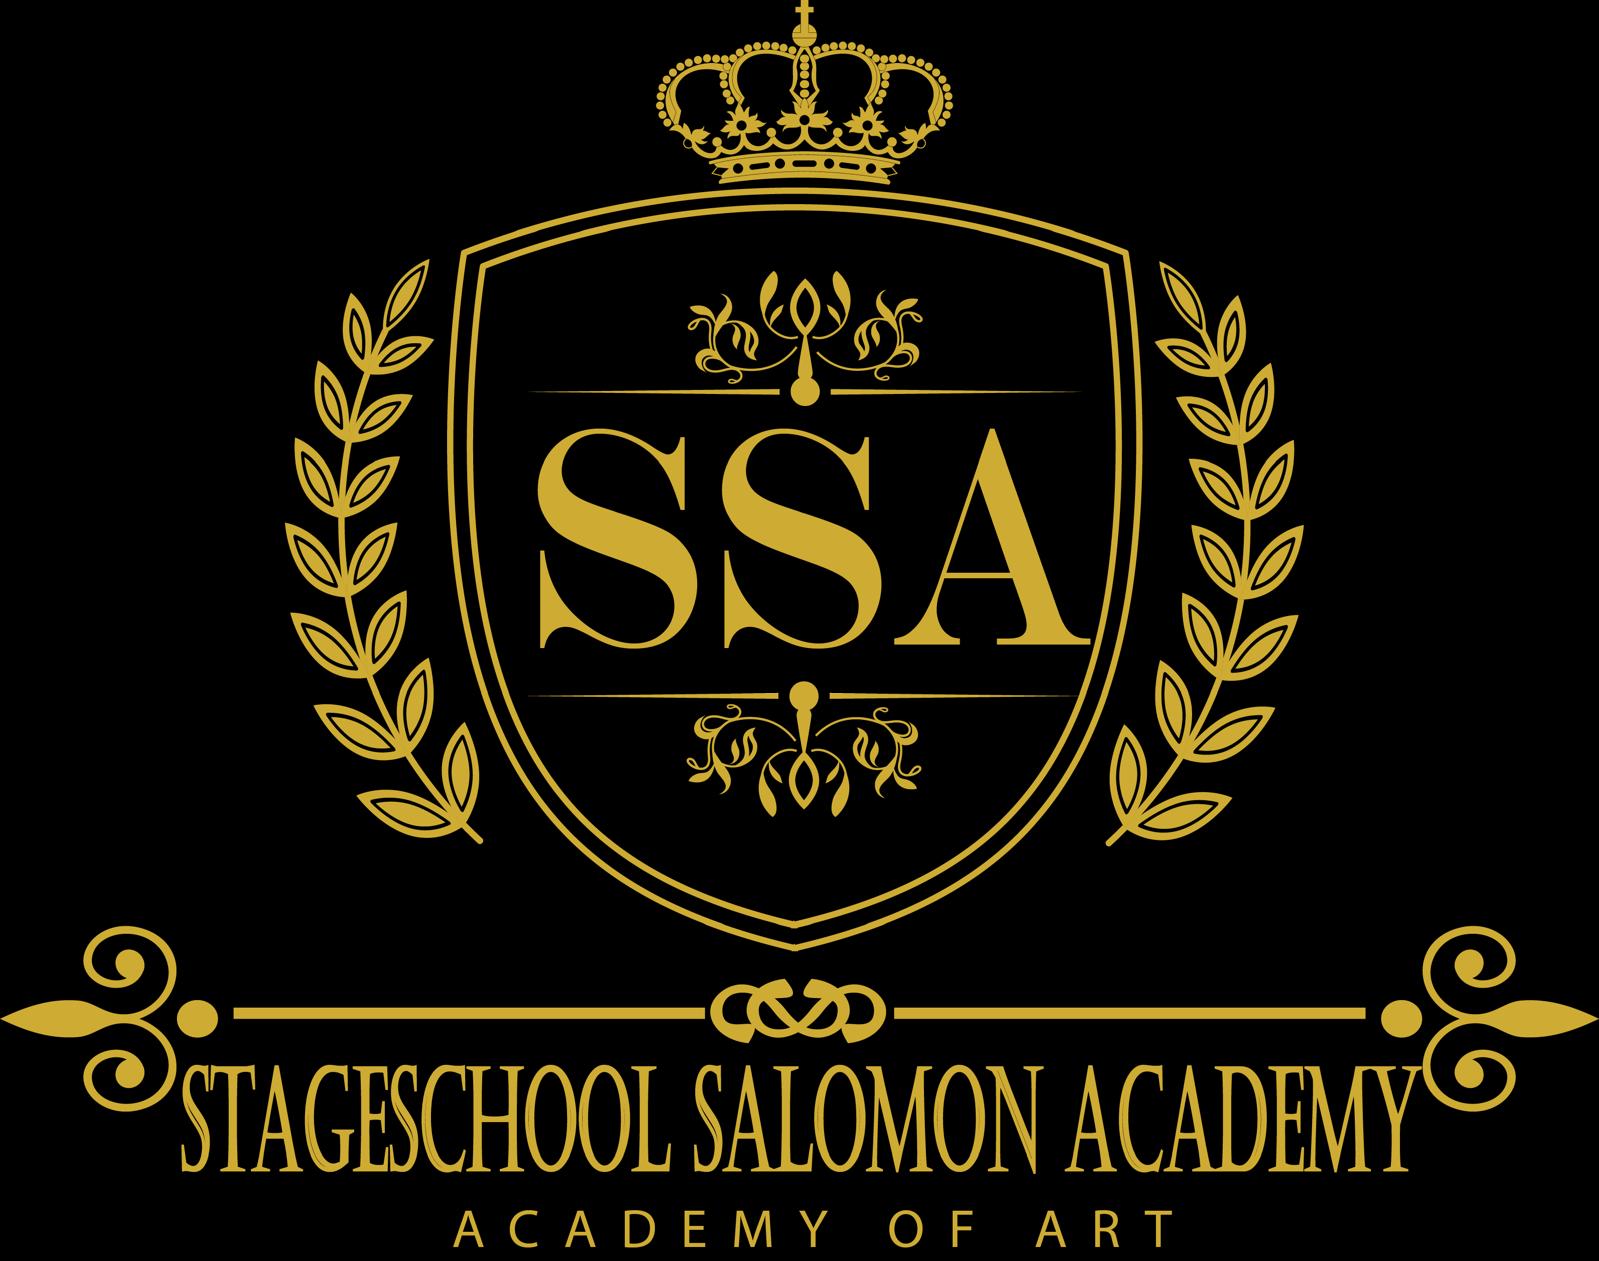 Stageschool Salomon Academy Düsseldorf